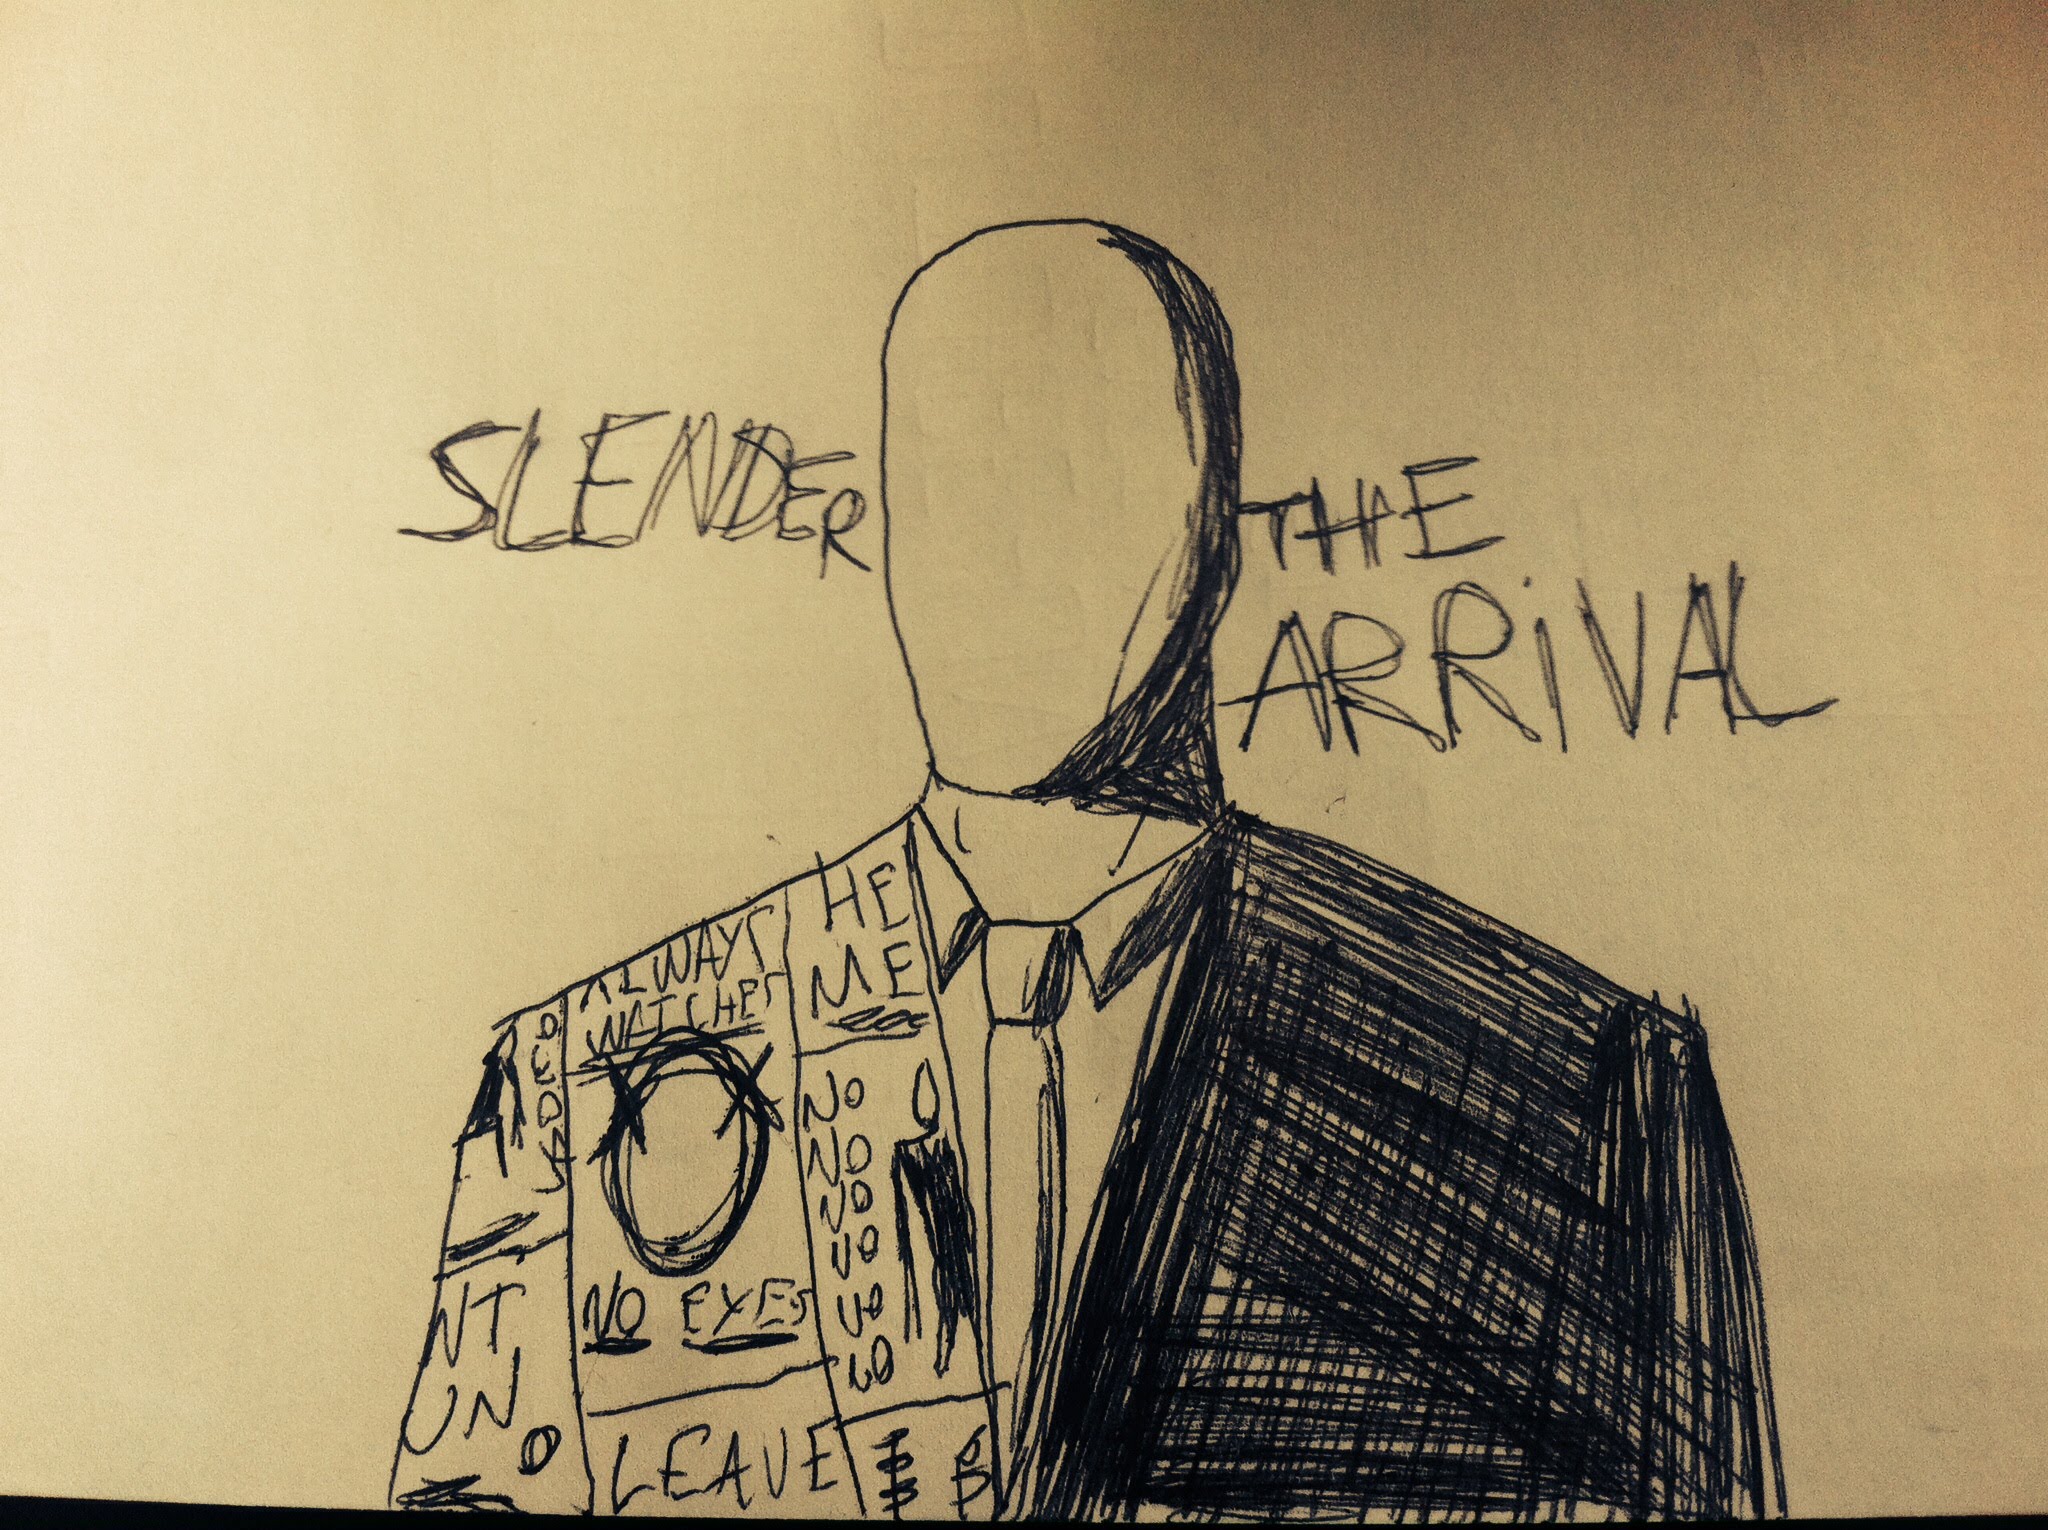 [FAC]:Slender-The Arrivals